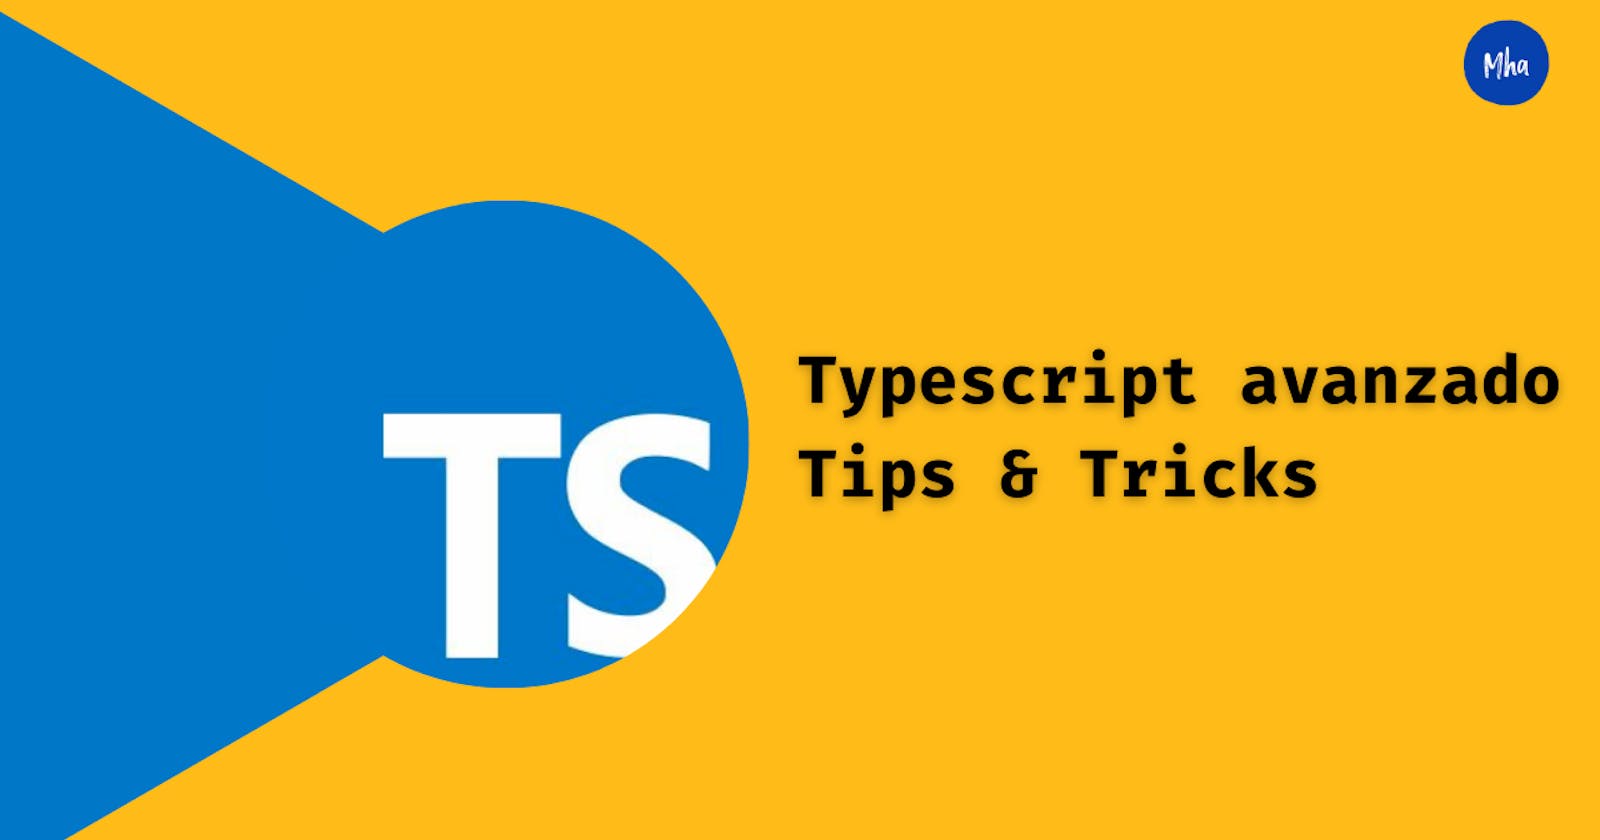 Typescript avanzado: Tips & Tricks